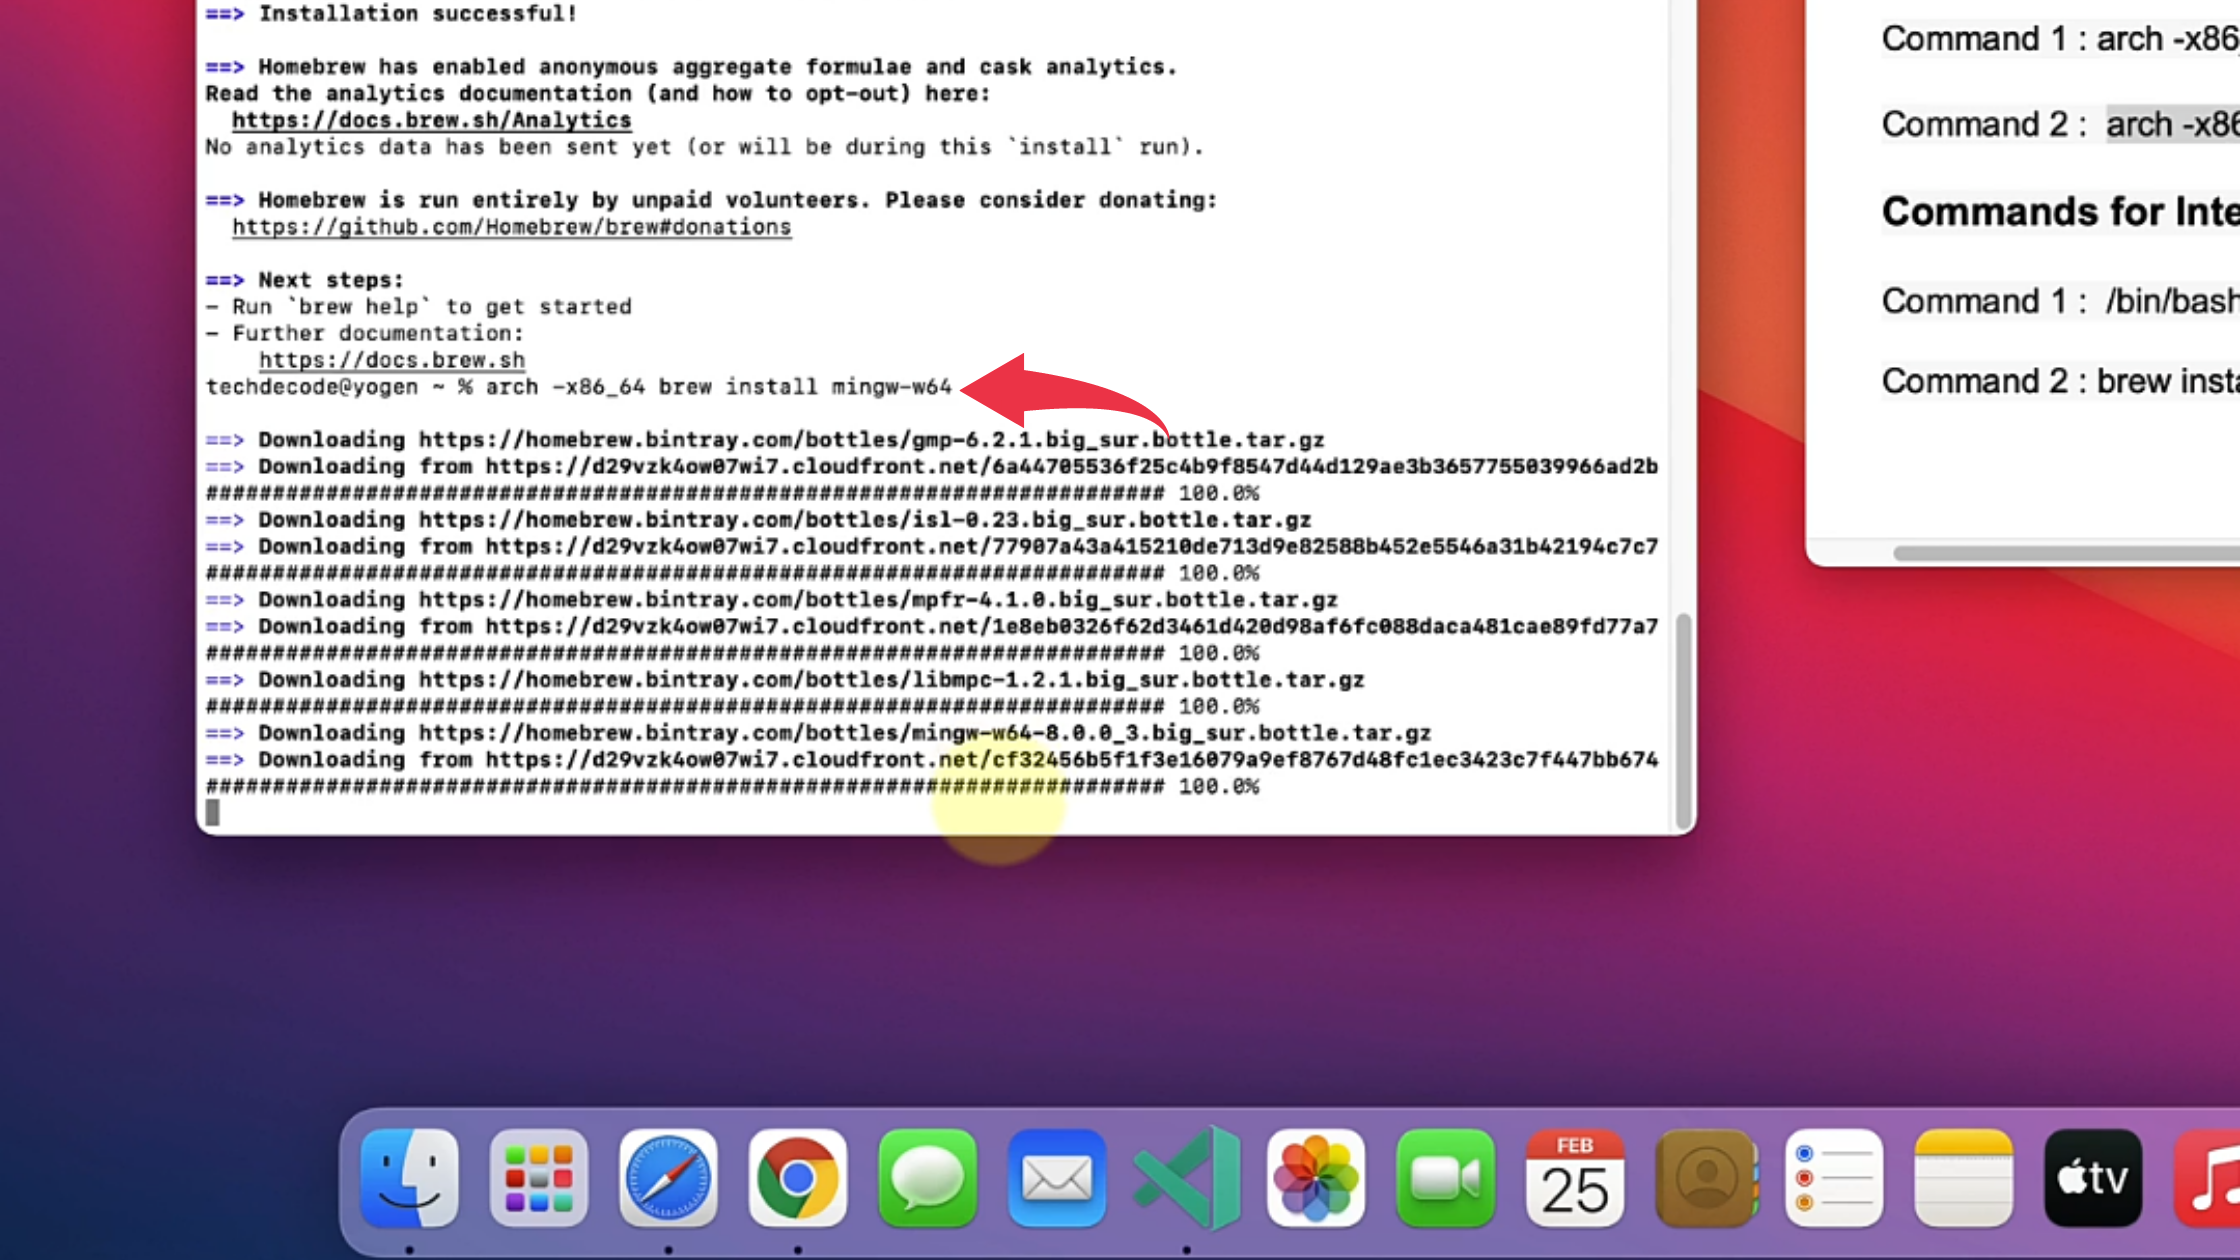 vs c coding on mac